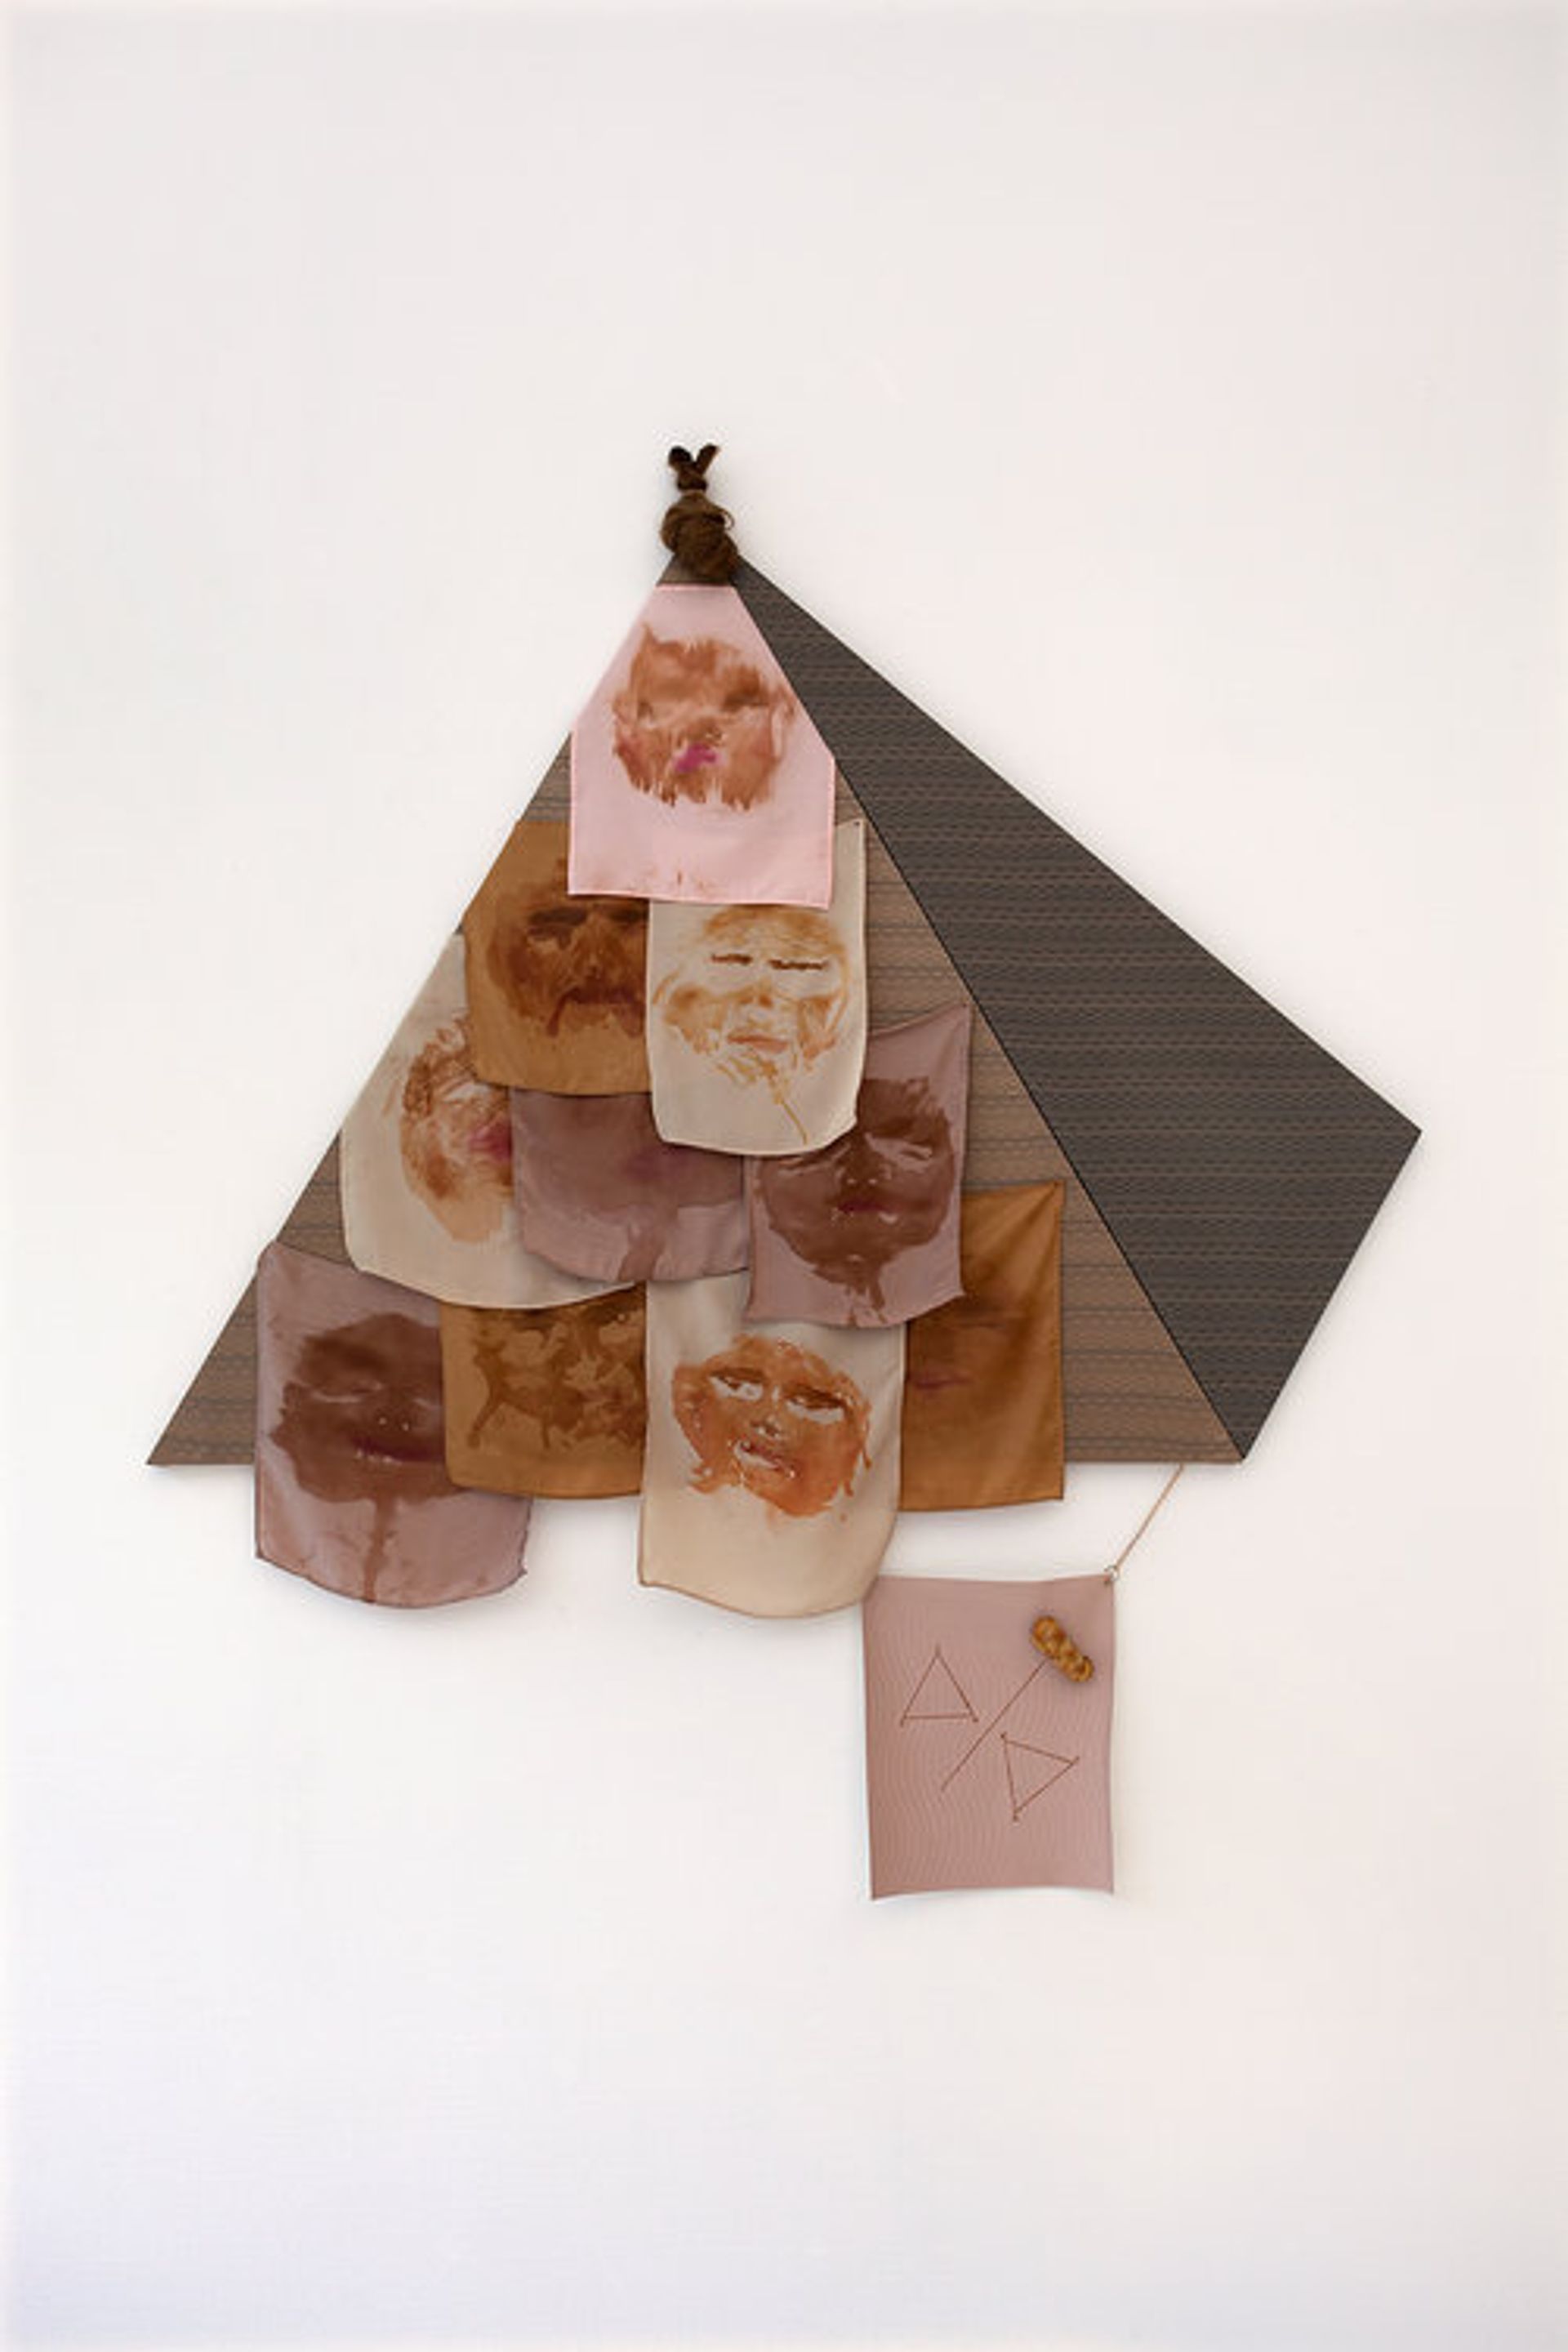 Ana Navas, Pyramid, 2018
fabric, hair, silk paint, bread, polyester resin 
145 x 155 cm

Photo: Sebastian Kissel 